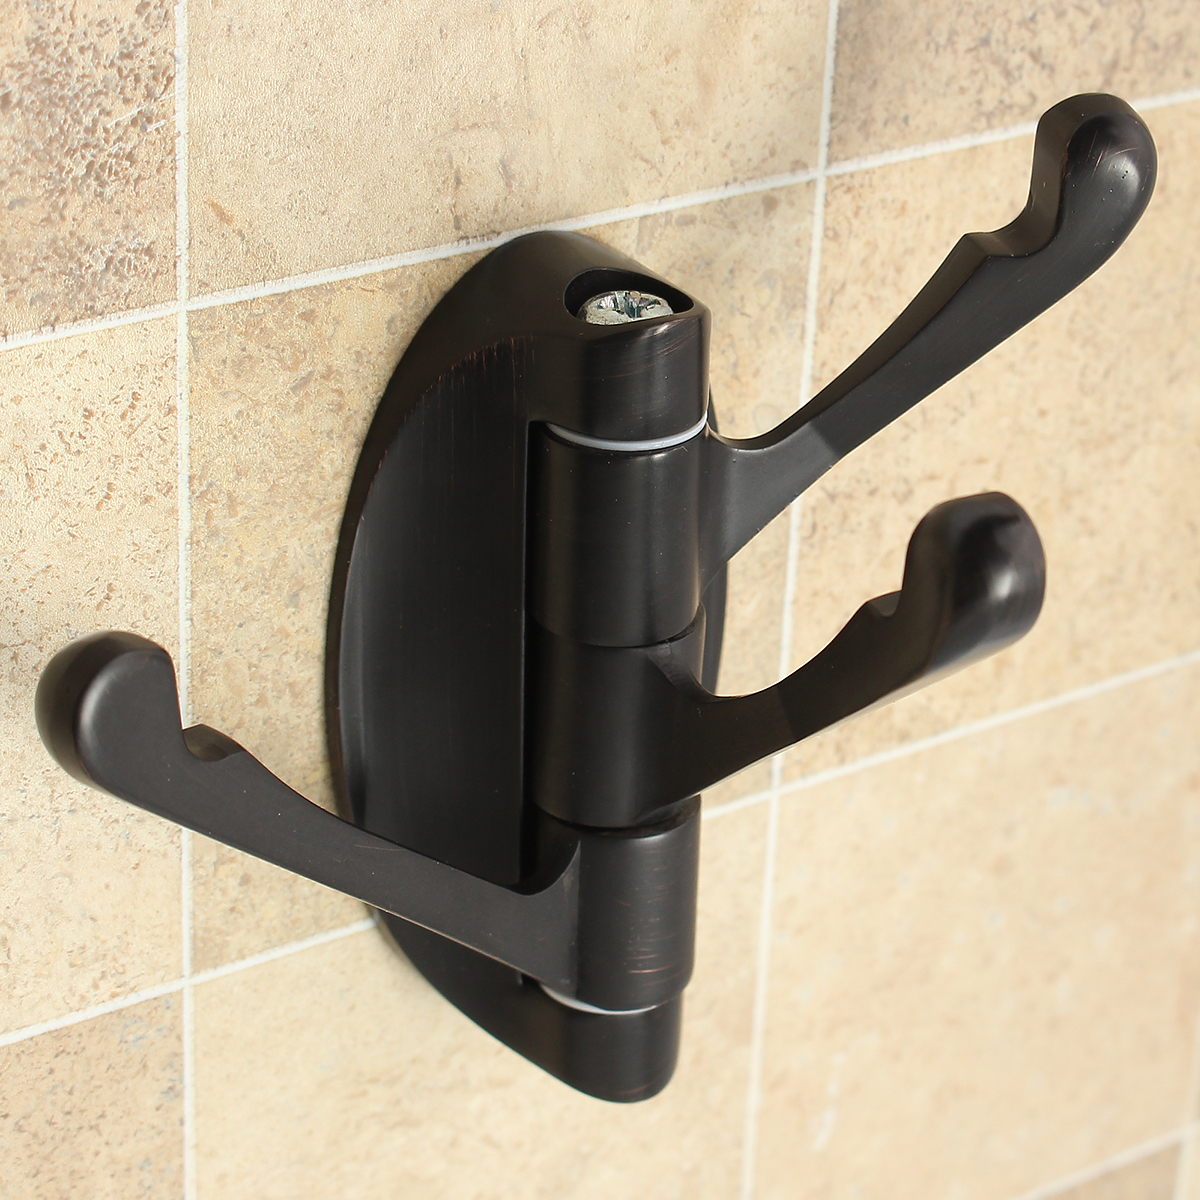 180deg-Revolve-Bathroom-Robe-Hook-Holder-Wall-Mounted-Adjustable-3-Hooks-Cloth-Hat-Towel-Hanger-1419817-3